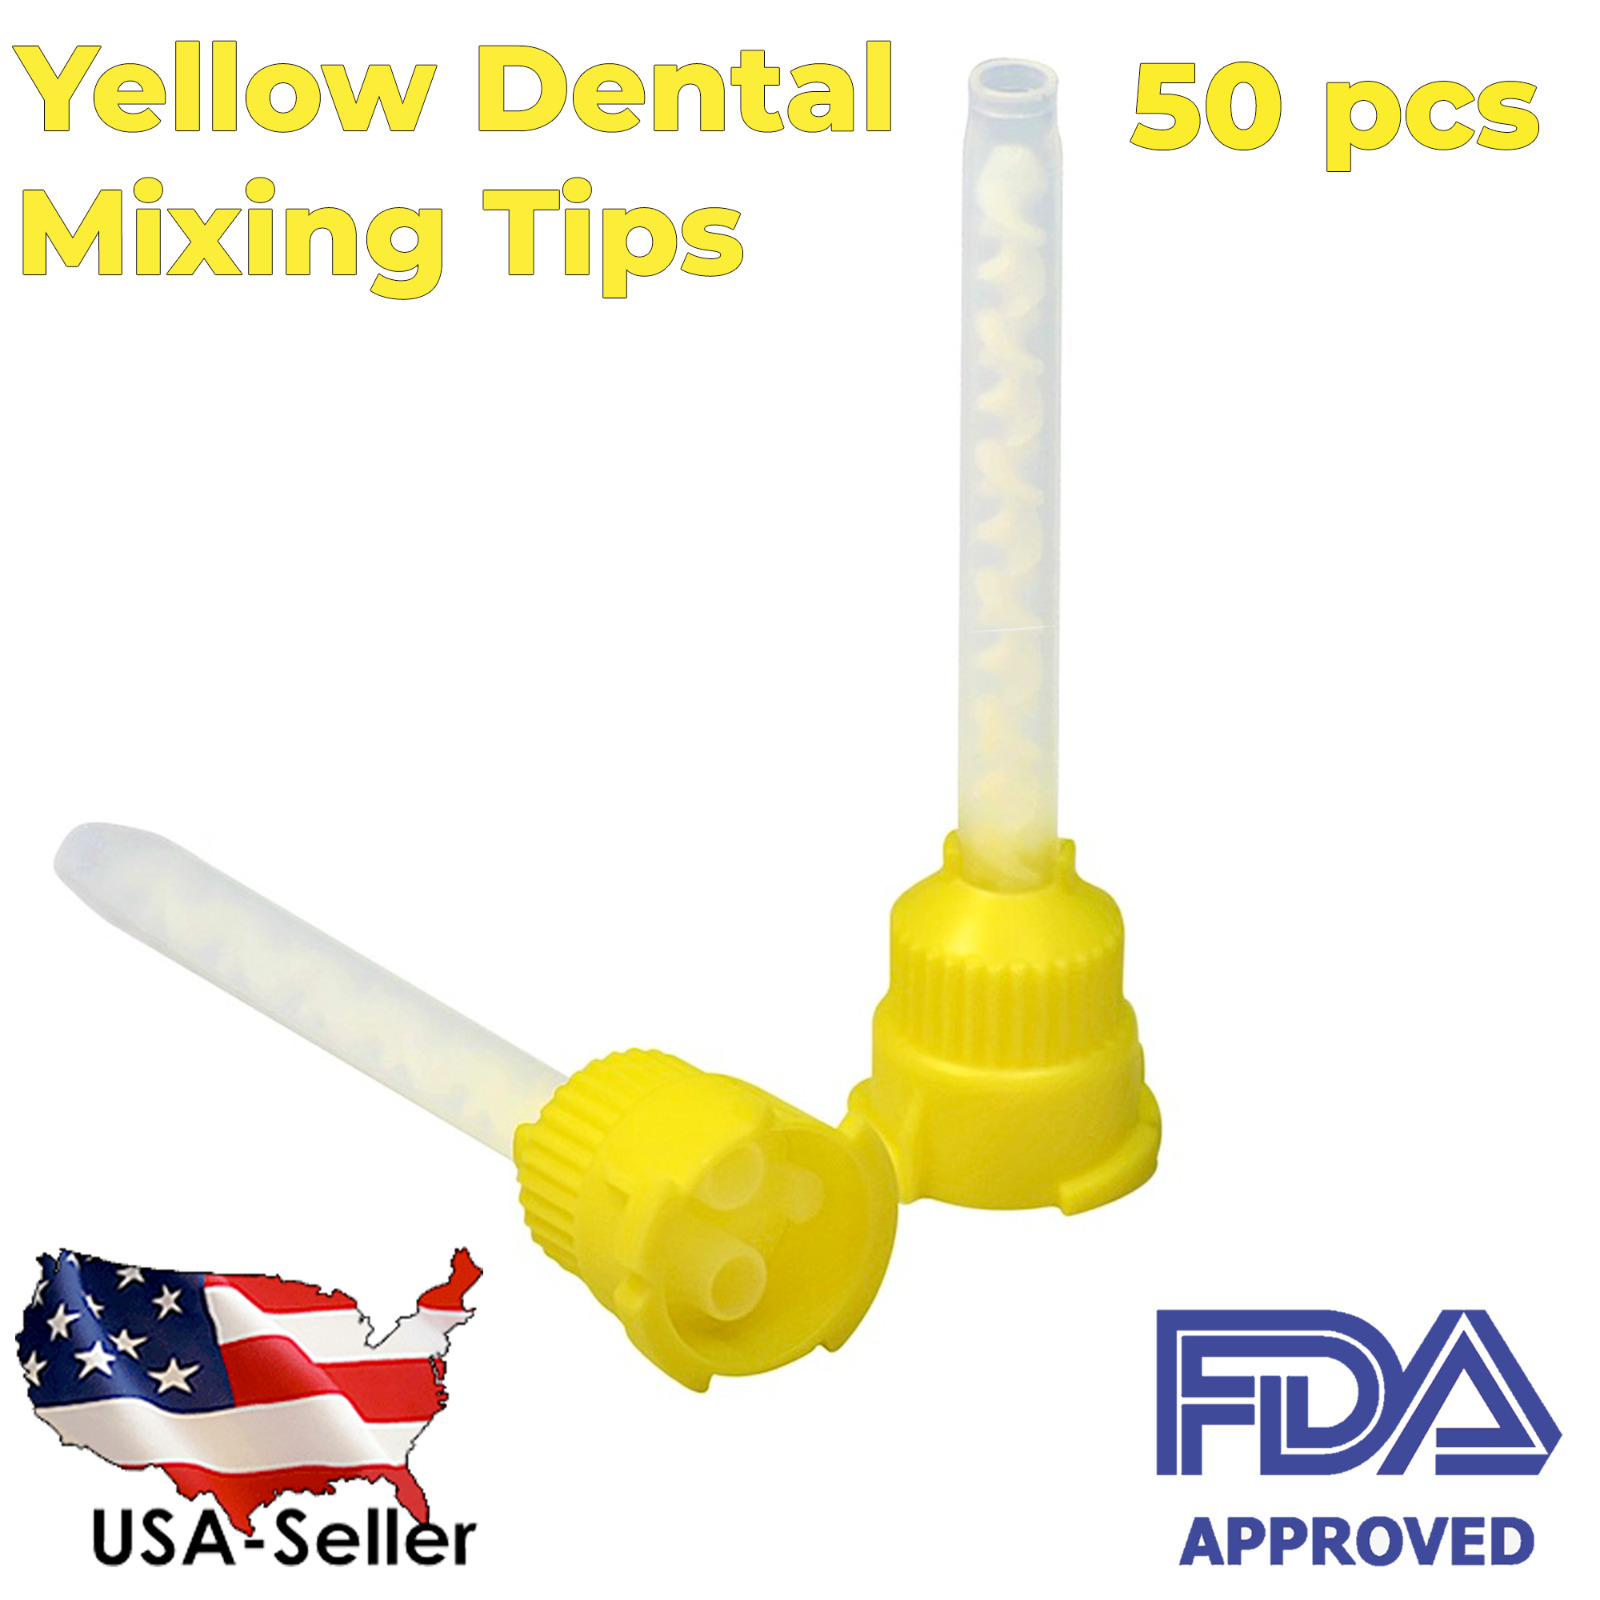 Yellow Dental Impression Mixing Tips (50 pcs) (FDA)